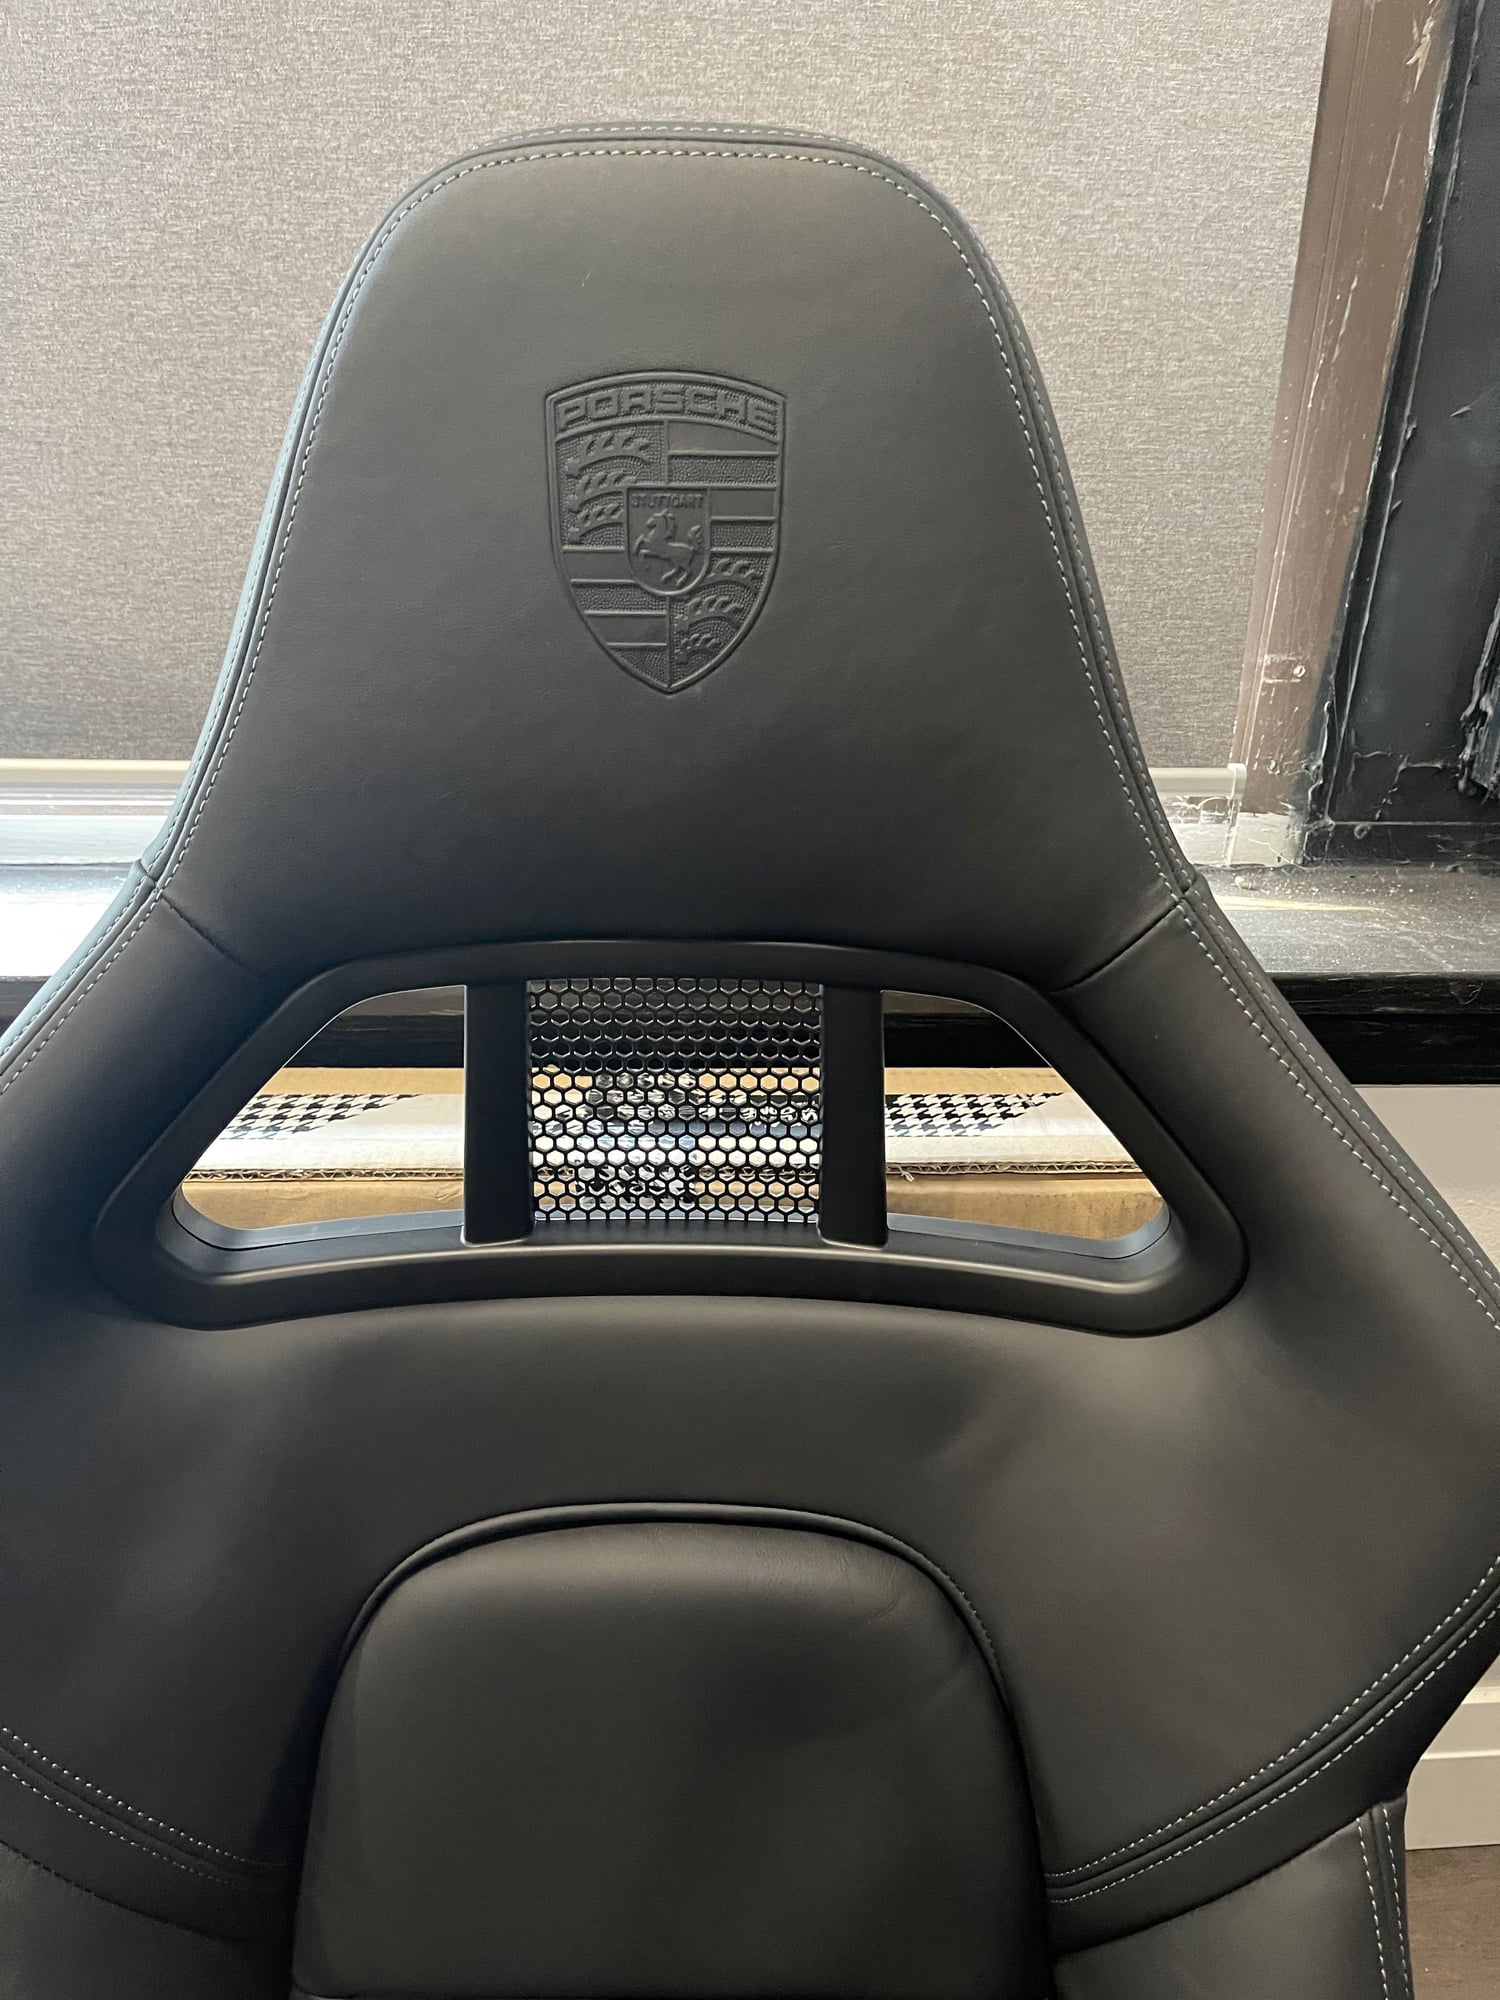 Interior/Upholstery - Genuine Porsche GT3RS carbon seats - New - 1989 to 2019 Porsche 911 - North York, ON M3J2K6, Canada